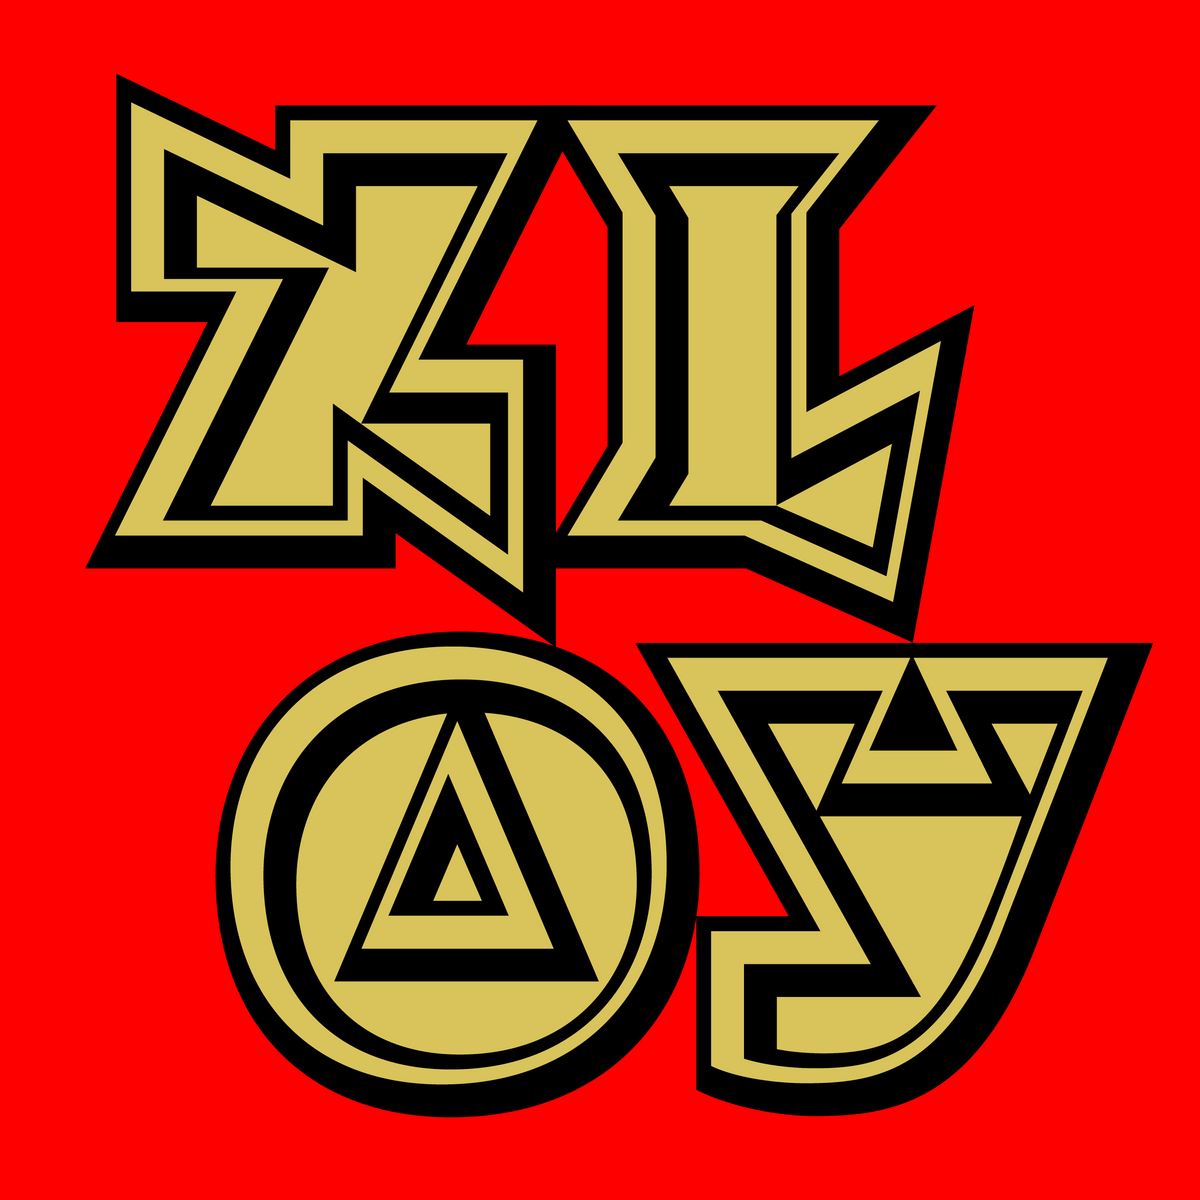 Zloy typeface, designed by type designer Daria Petrova. 